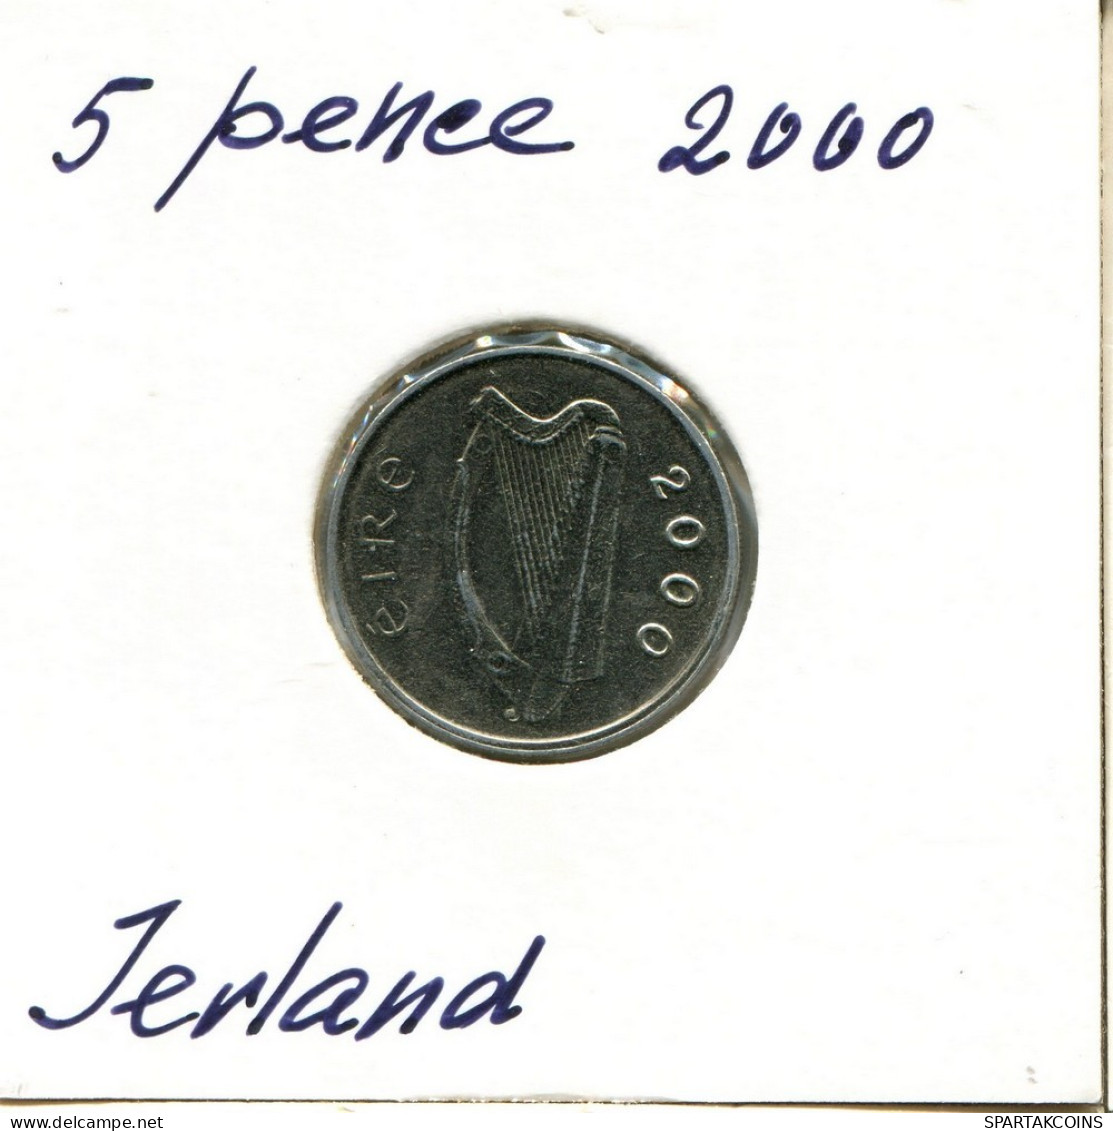 5 PENCE 2000 IRLAND IRELAND Münze #AY687.D.A - Ireland